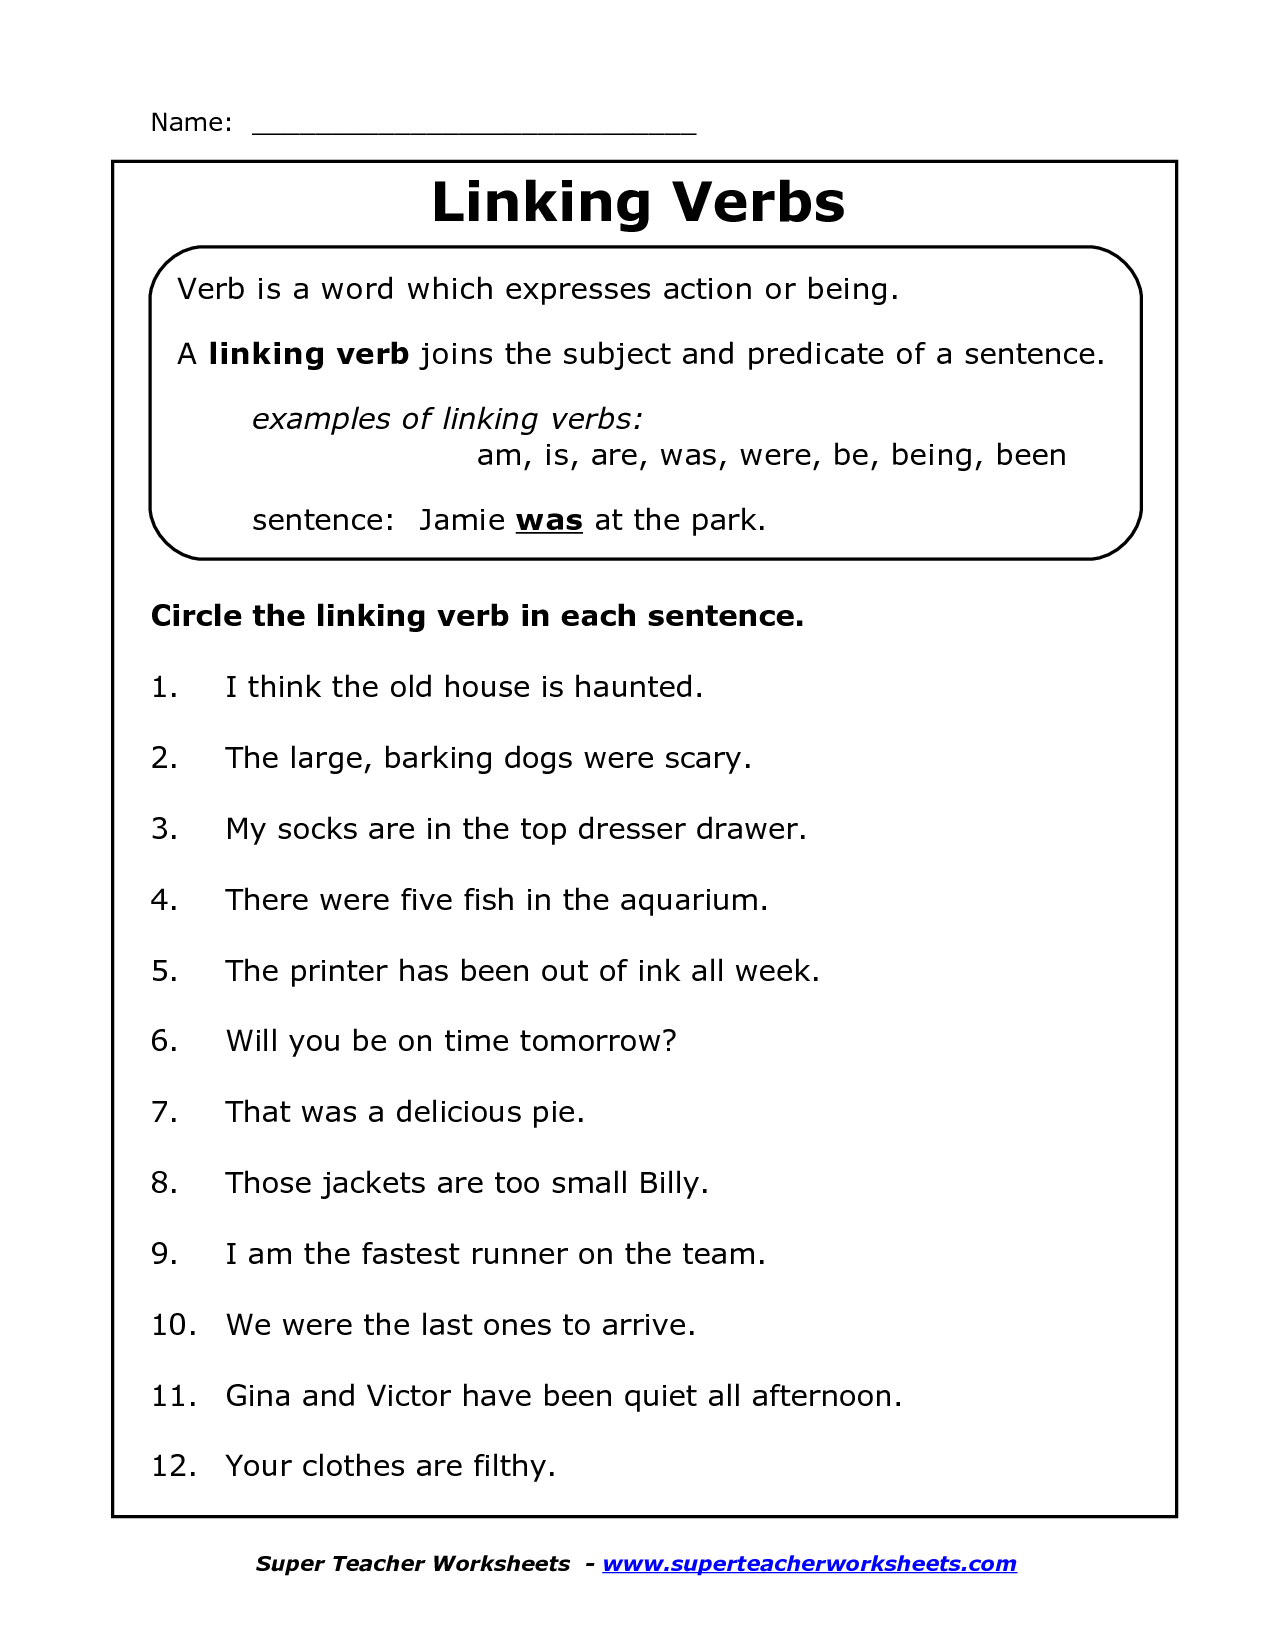 linking-verbs-worksheets-5th-grade-linking-verbs-helping-verbs-verb-worksheets